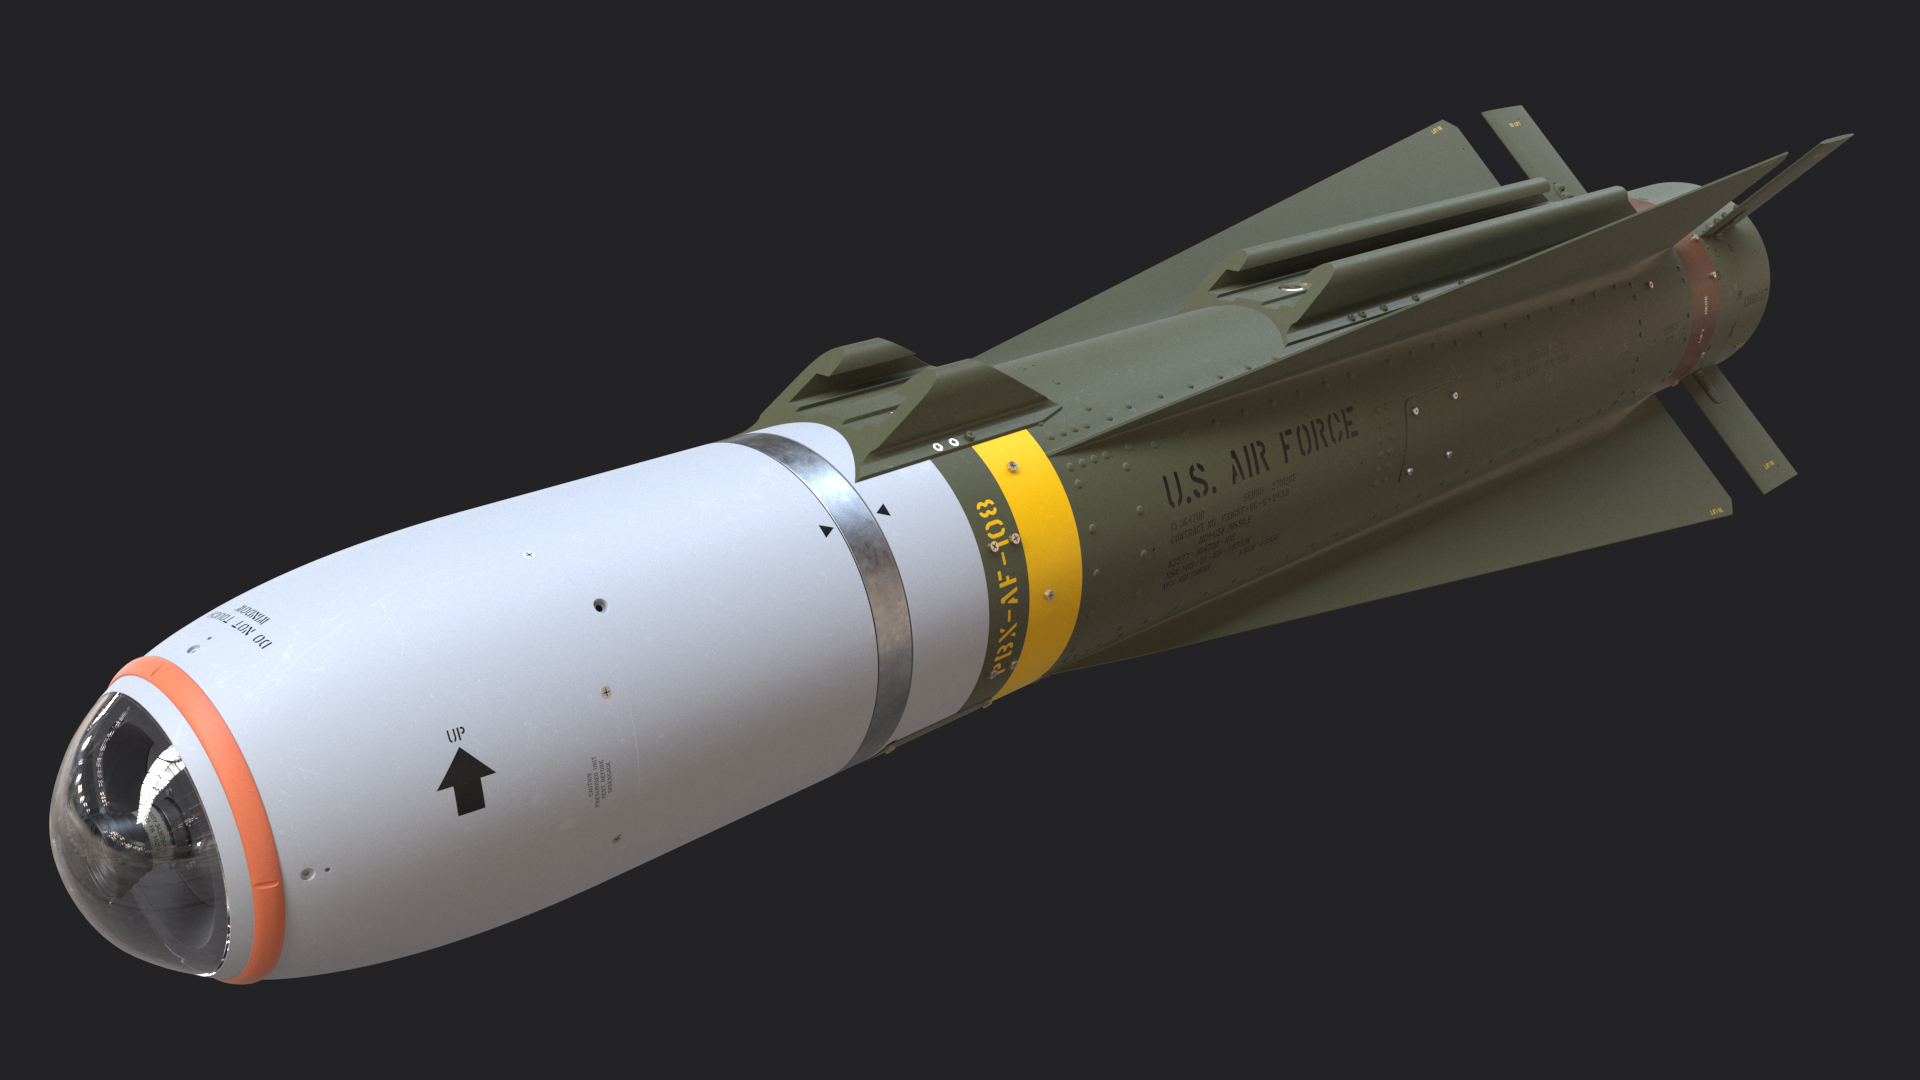 Agm-65 maverick missile 3D model - TurboSquid 1579567